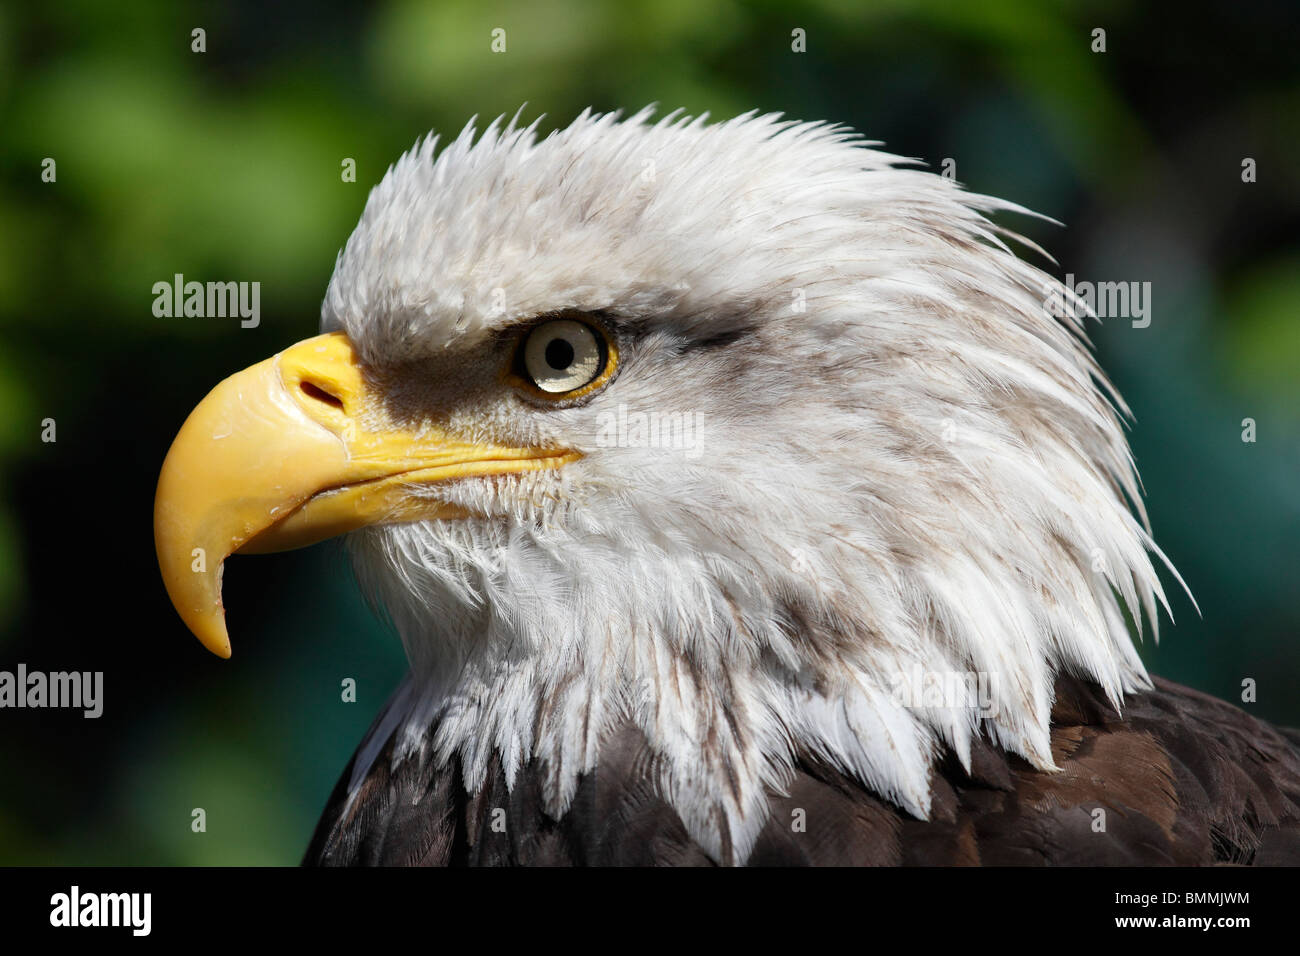 Magnificent Bald Eagle in Ketchikan, Alaska 8 Stock Photo